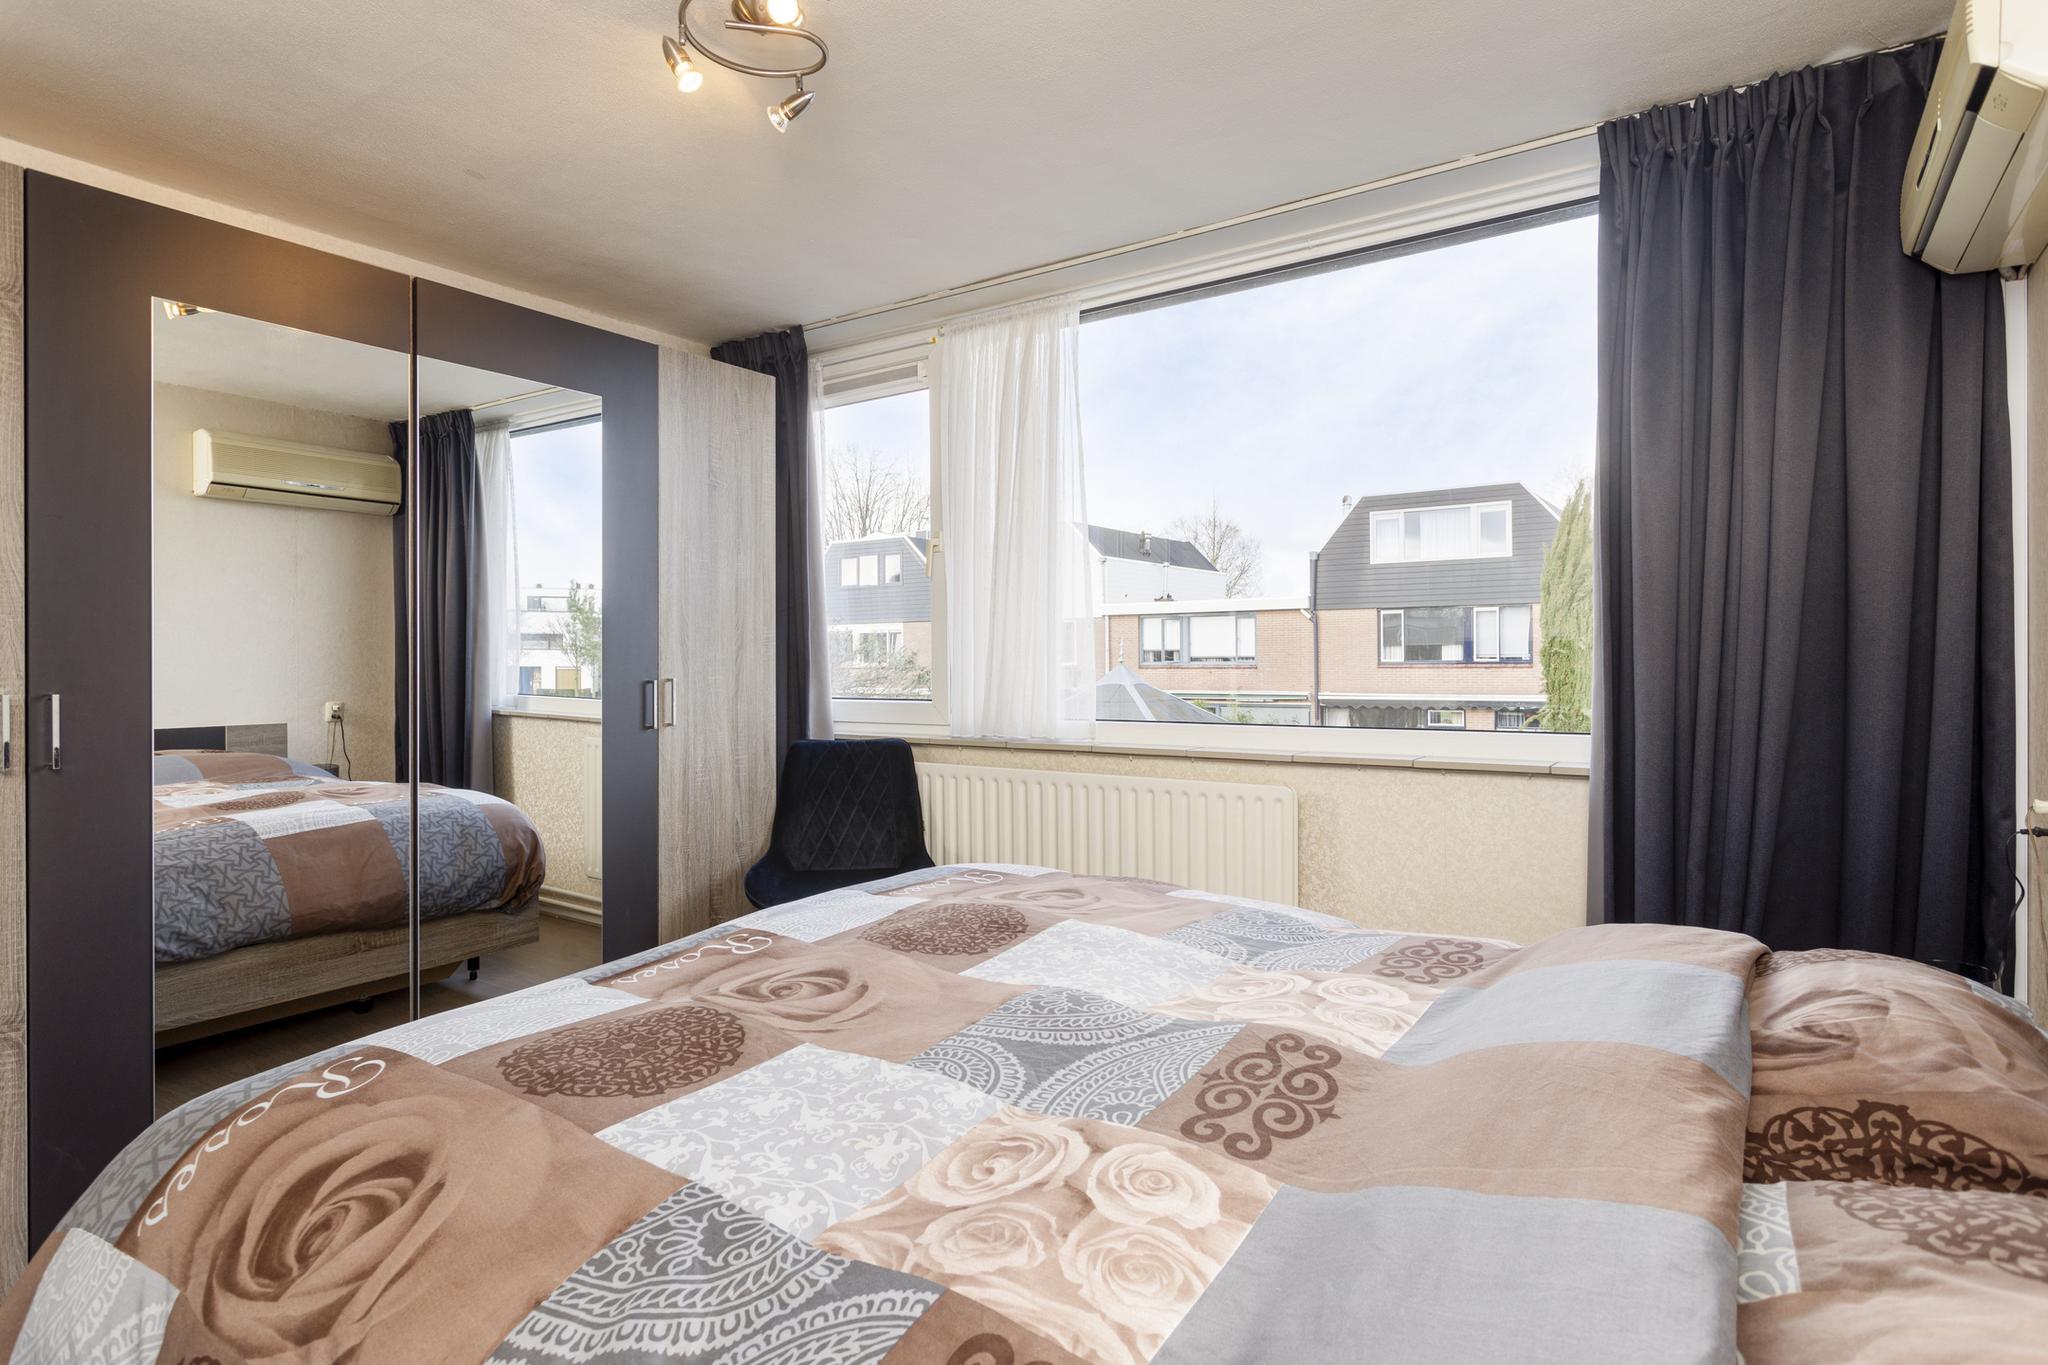 Slaapkamer 1 vanaf bed, Willem van Geldorpstraat 9 Rosmalen